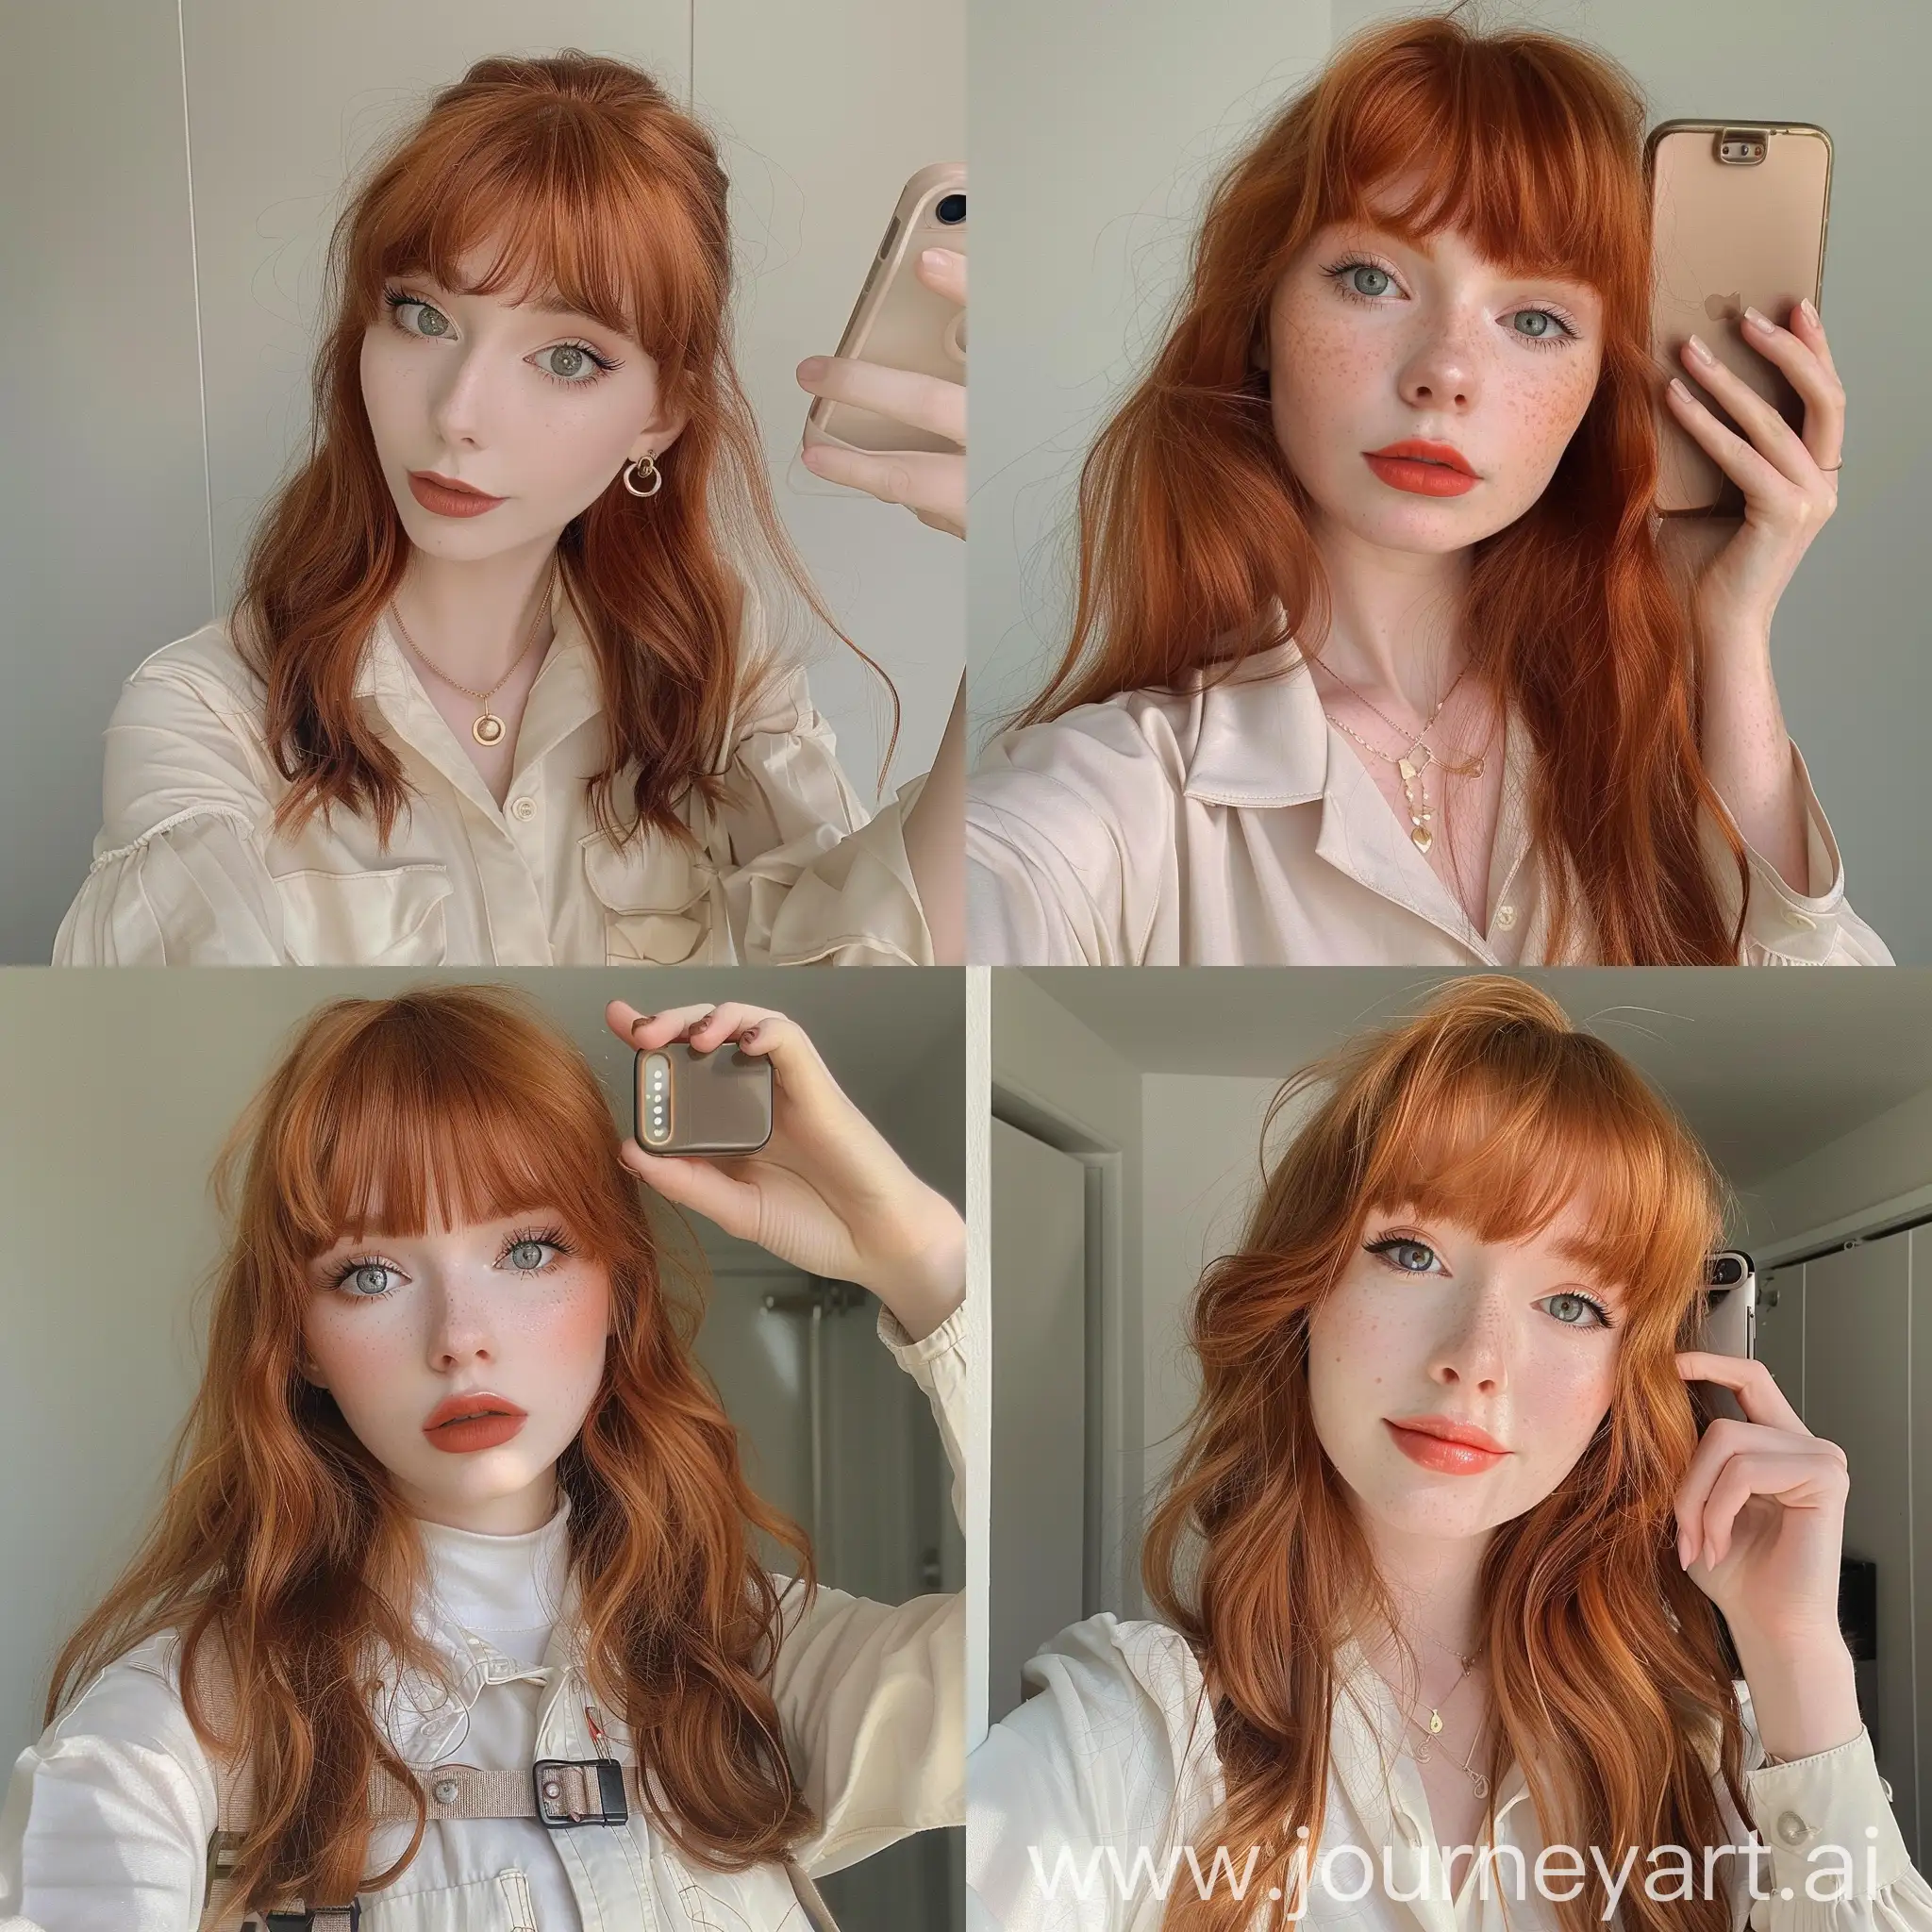 Redheaded-Girl-in-Light-Academia-Attire-Taking-Selfie